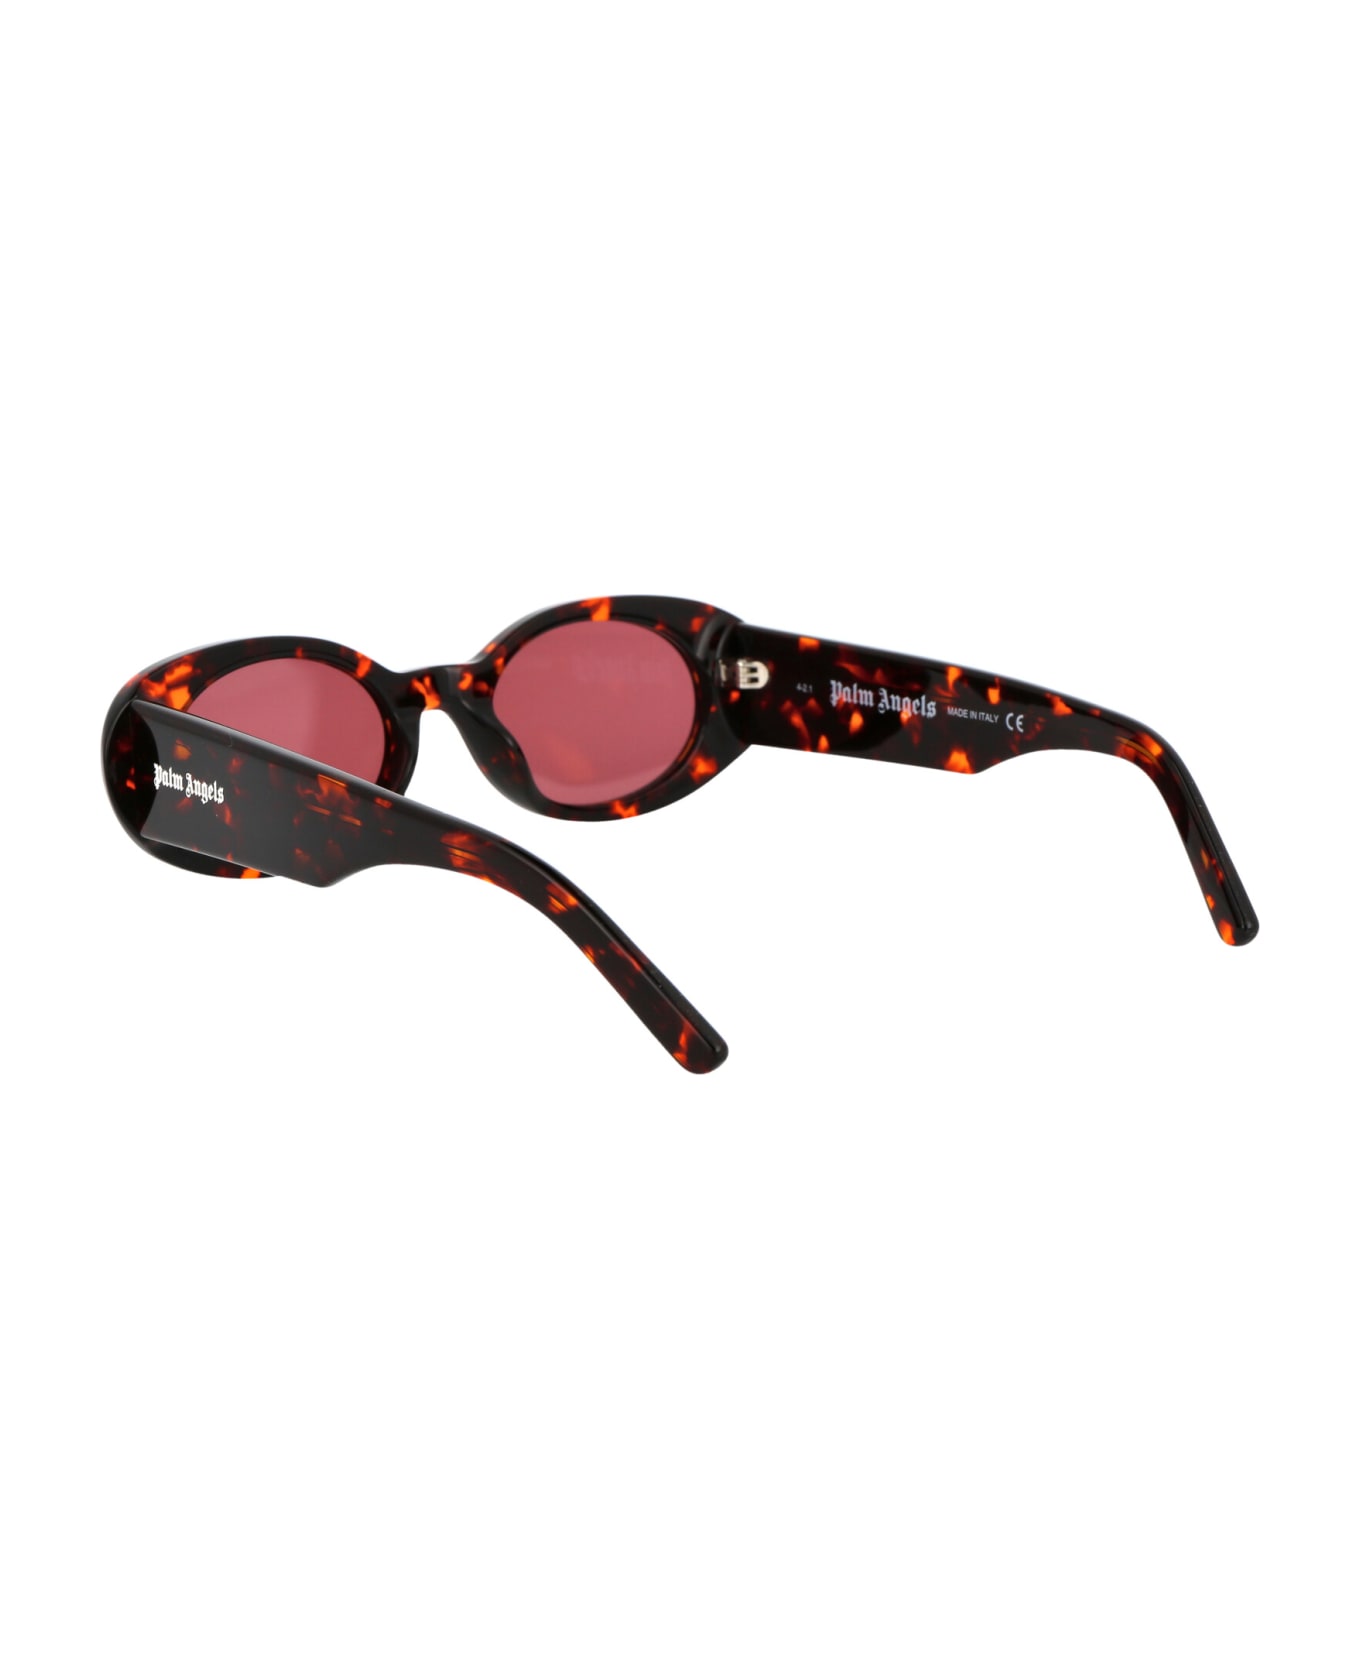 Palm Angels Spirit Safari Sunglasses - 6428 DARK HAVANA